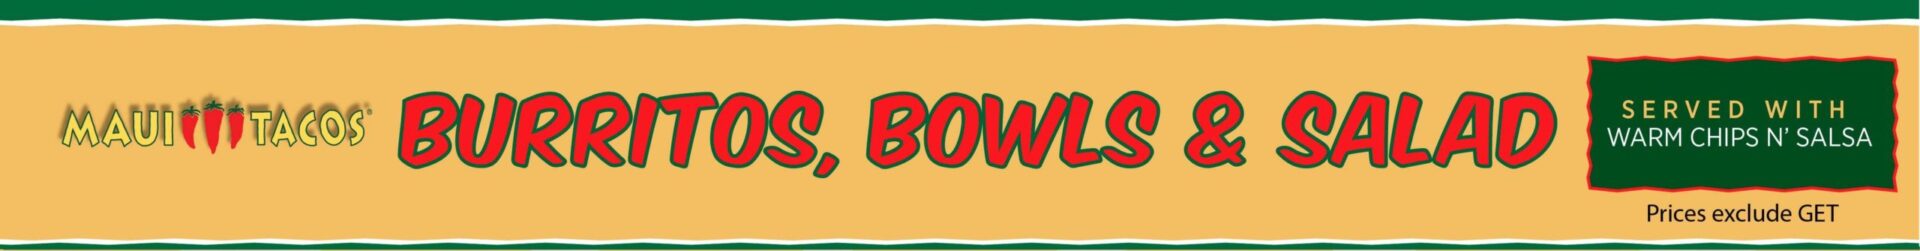 header-burrito-bowl